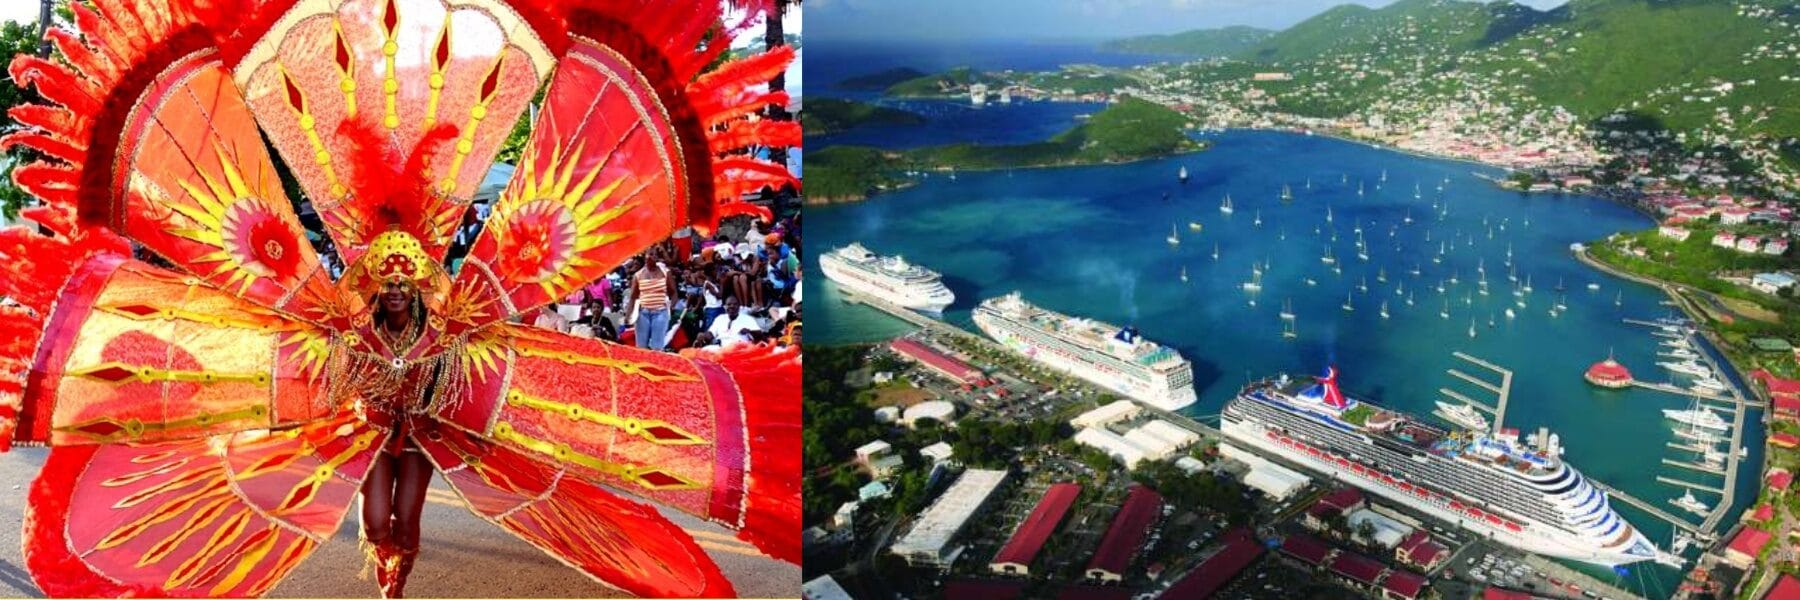 Virgin Islands Will Celebrate 70 Years Of Carnival